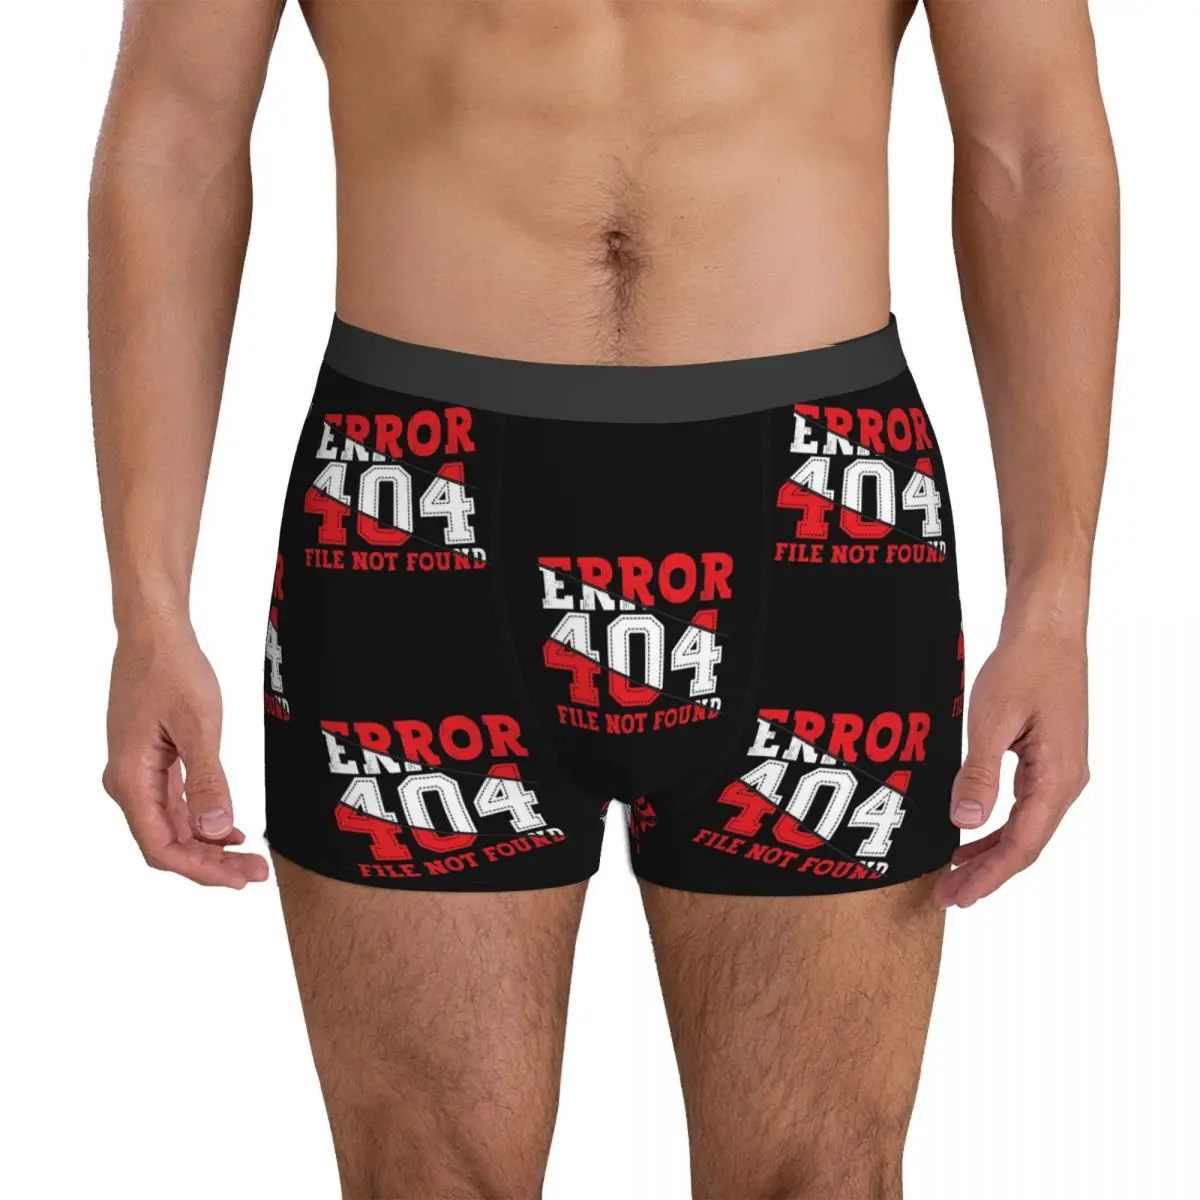 File Not Found Underwear error 404 Web humorous words Sublimation Boxershorts Hot Man Panties Sexy Shorts Briefs Birthday Gift